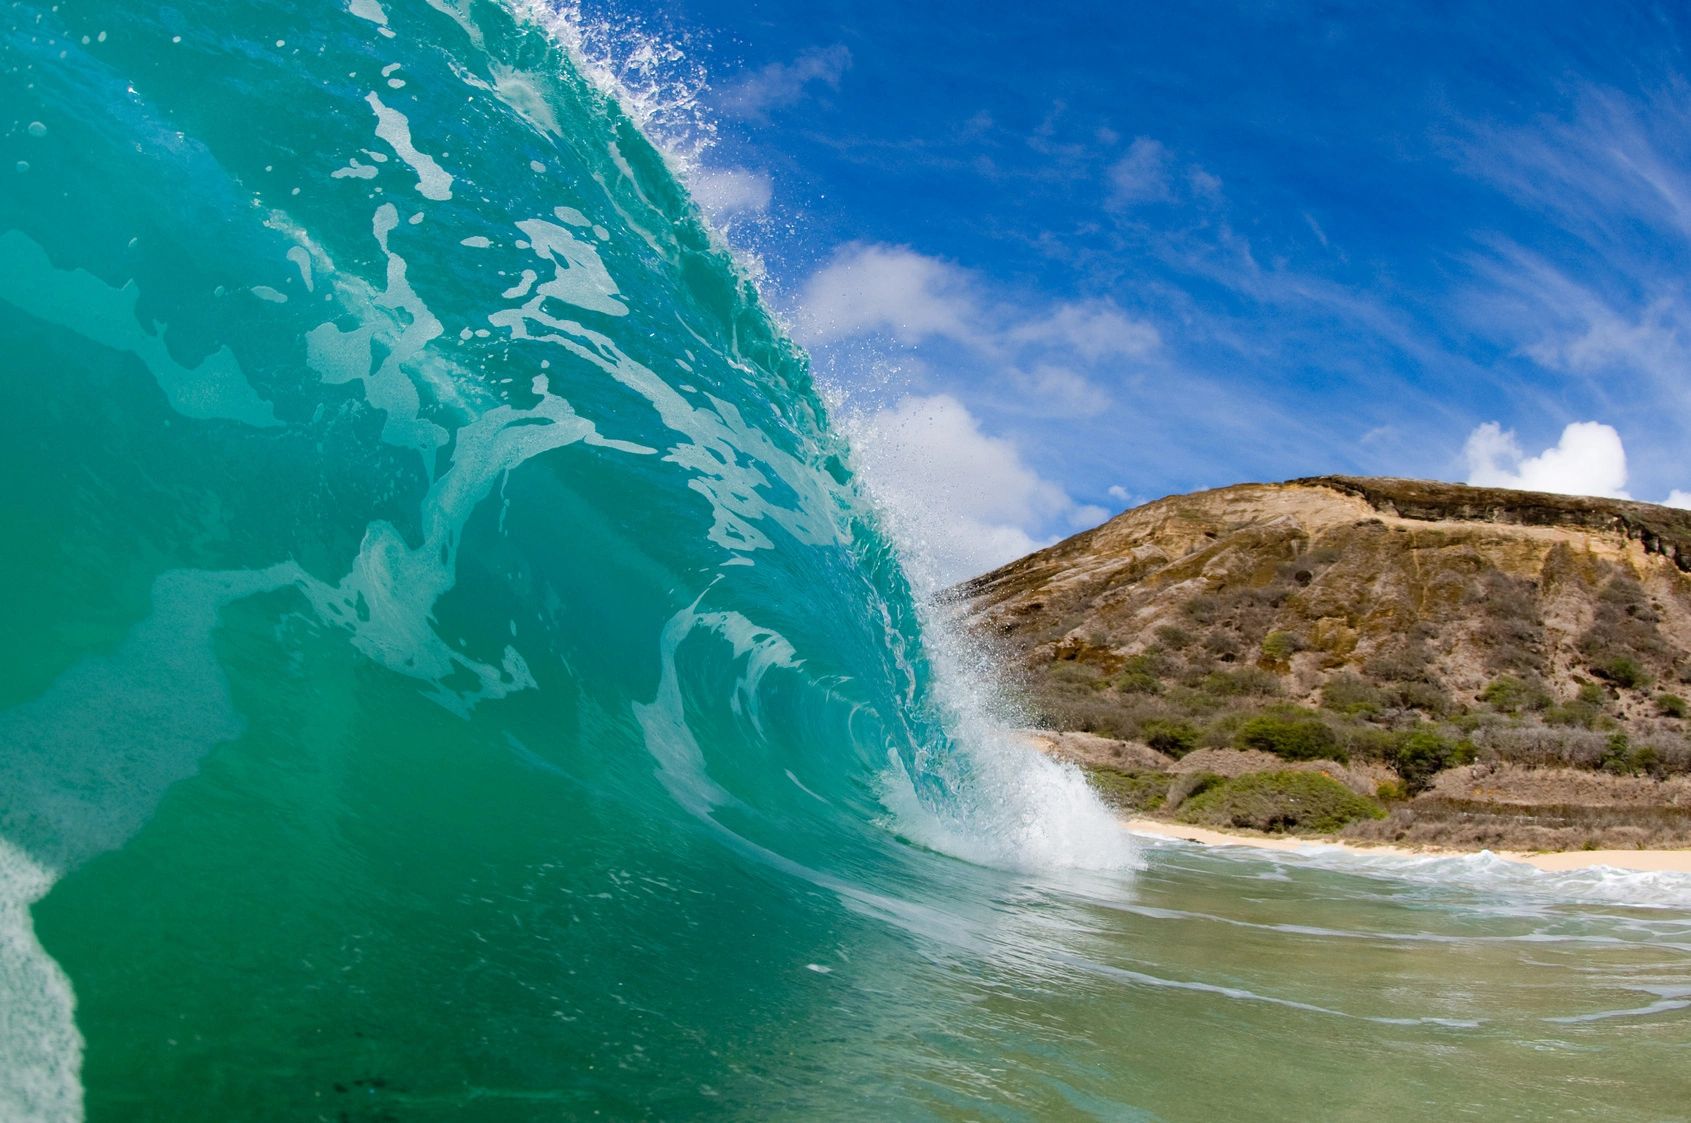 Wave breaking on the Maui coast.